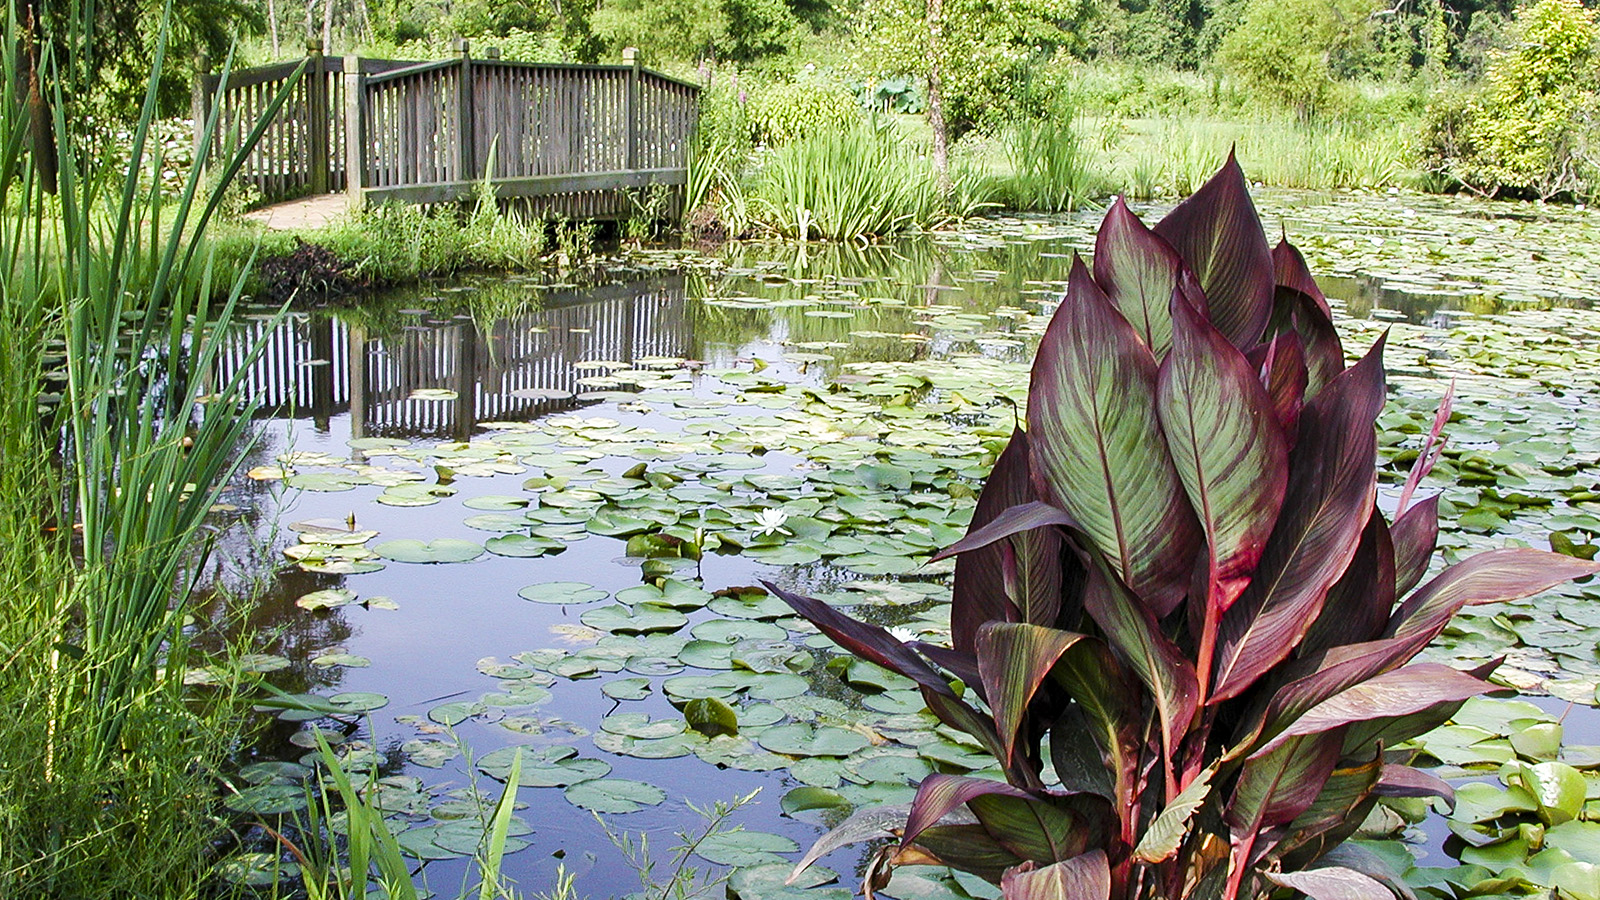 Kenilworth Aquatic Gardens The Cultural Landscape Foundation